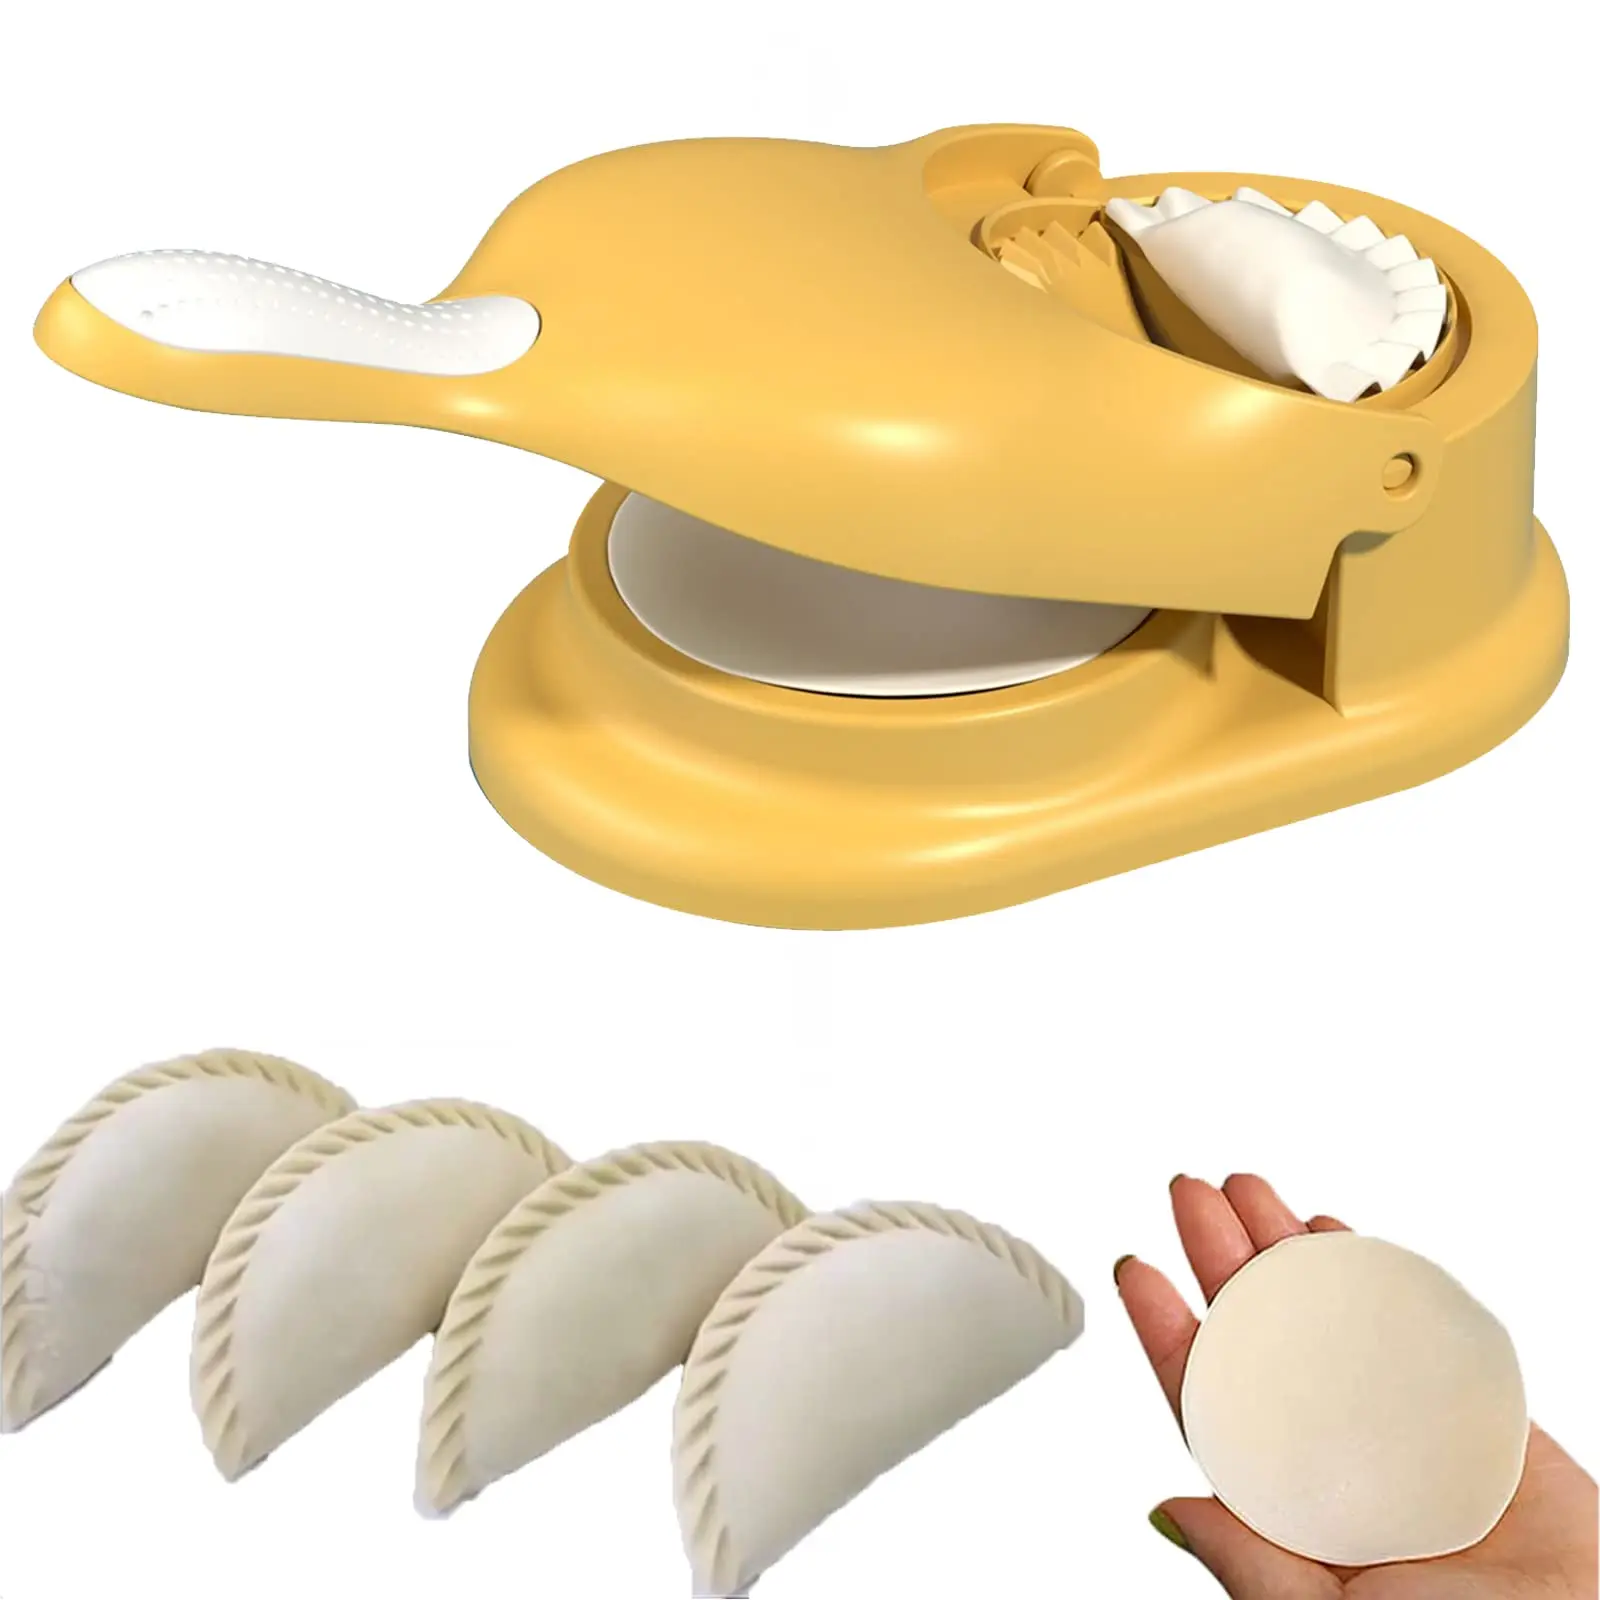 

Home Kitchen DIY Double Head Plastic Manual Dumpling Skin Maker Press 2 in 1 Dumpling Maker Molds